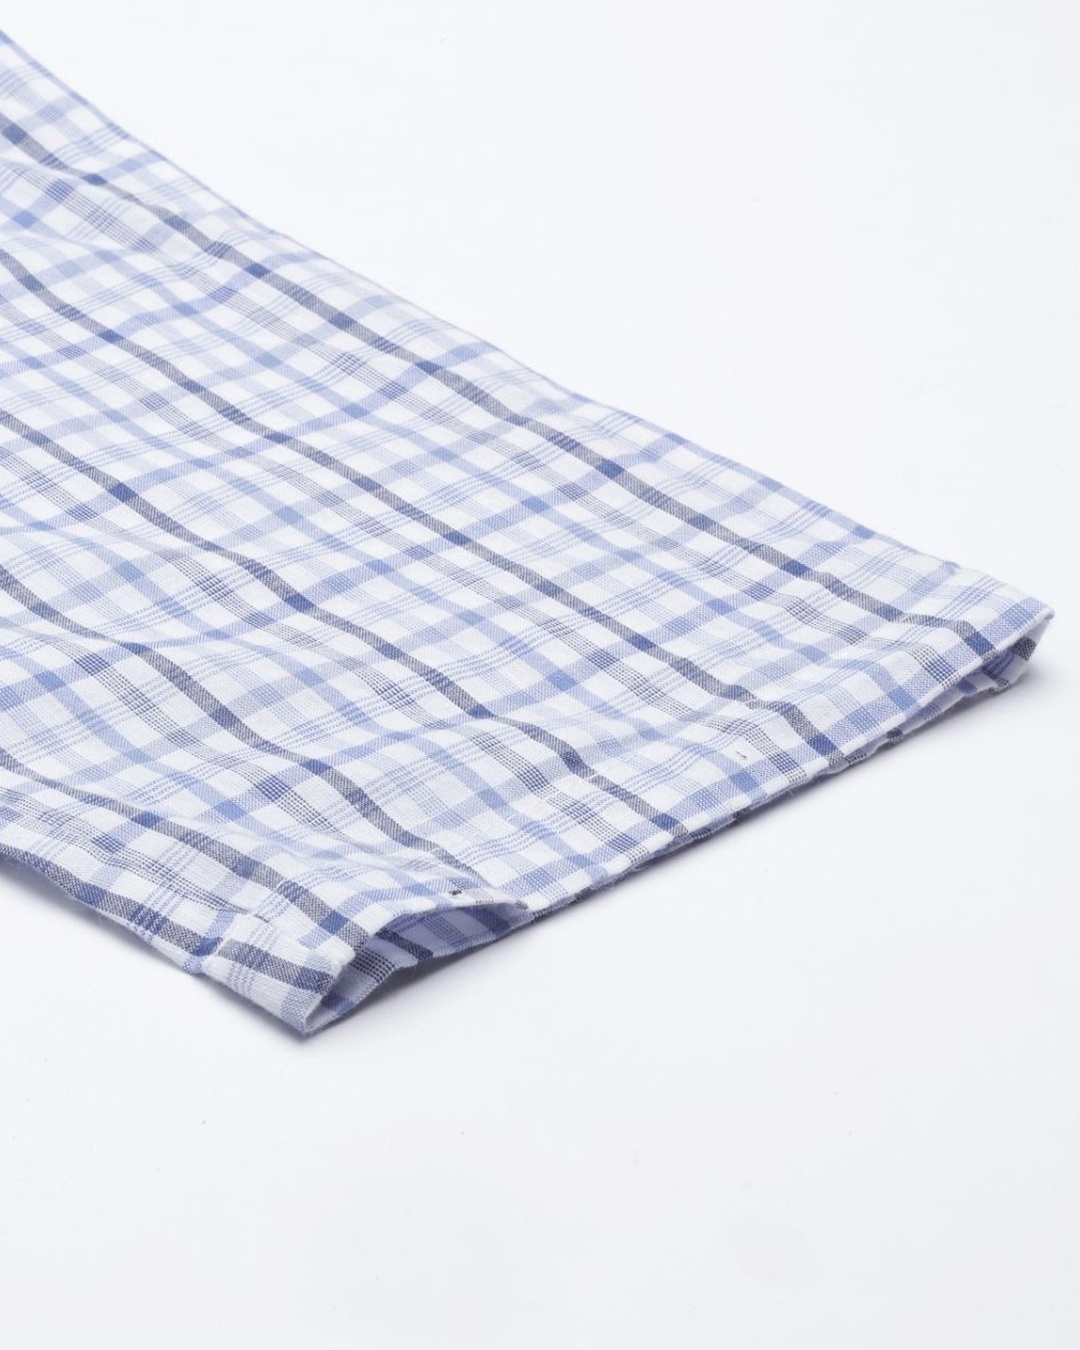 Shop Men's White & Blue Checked Cotton Pyjamas